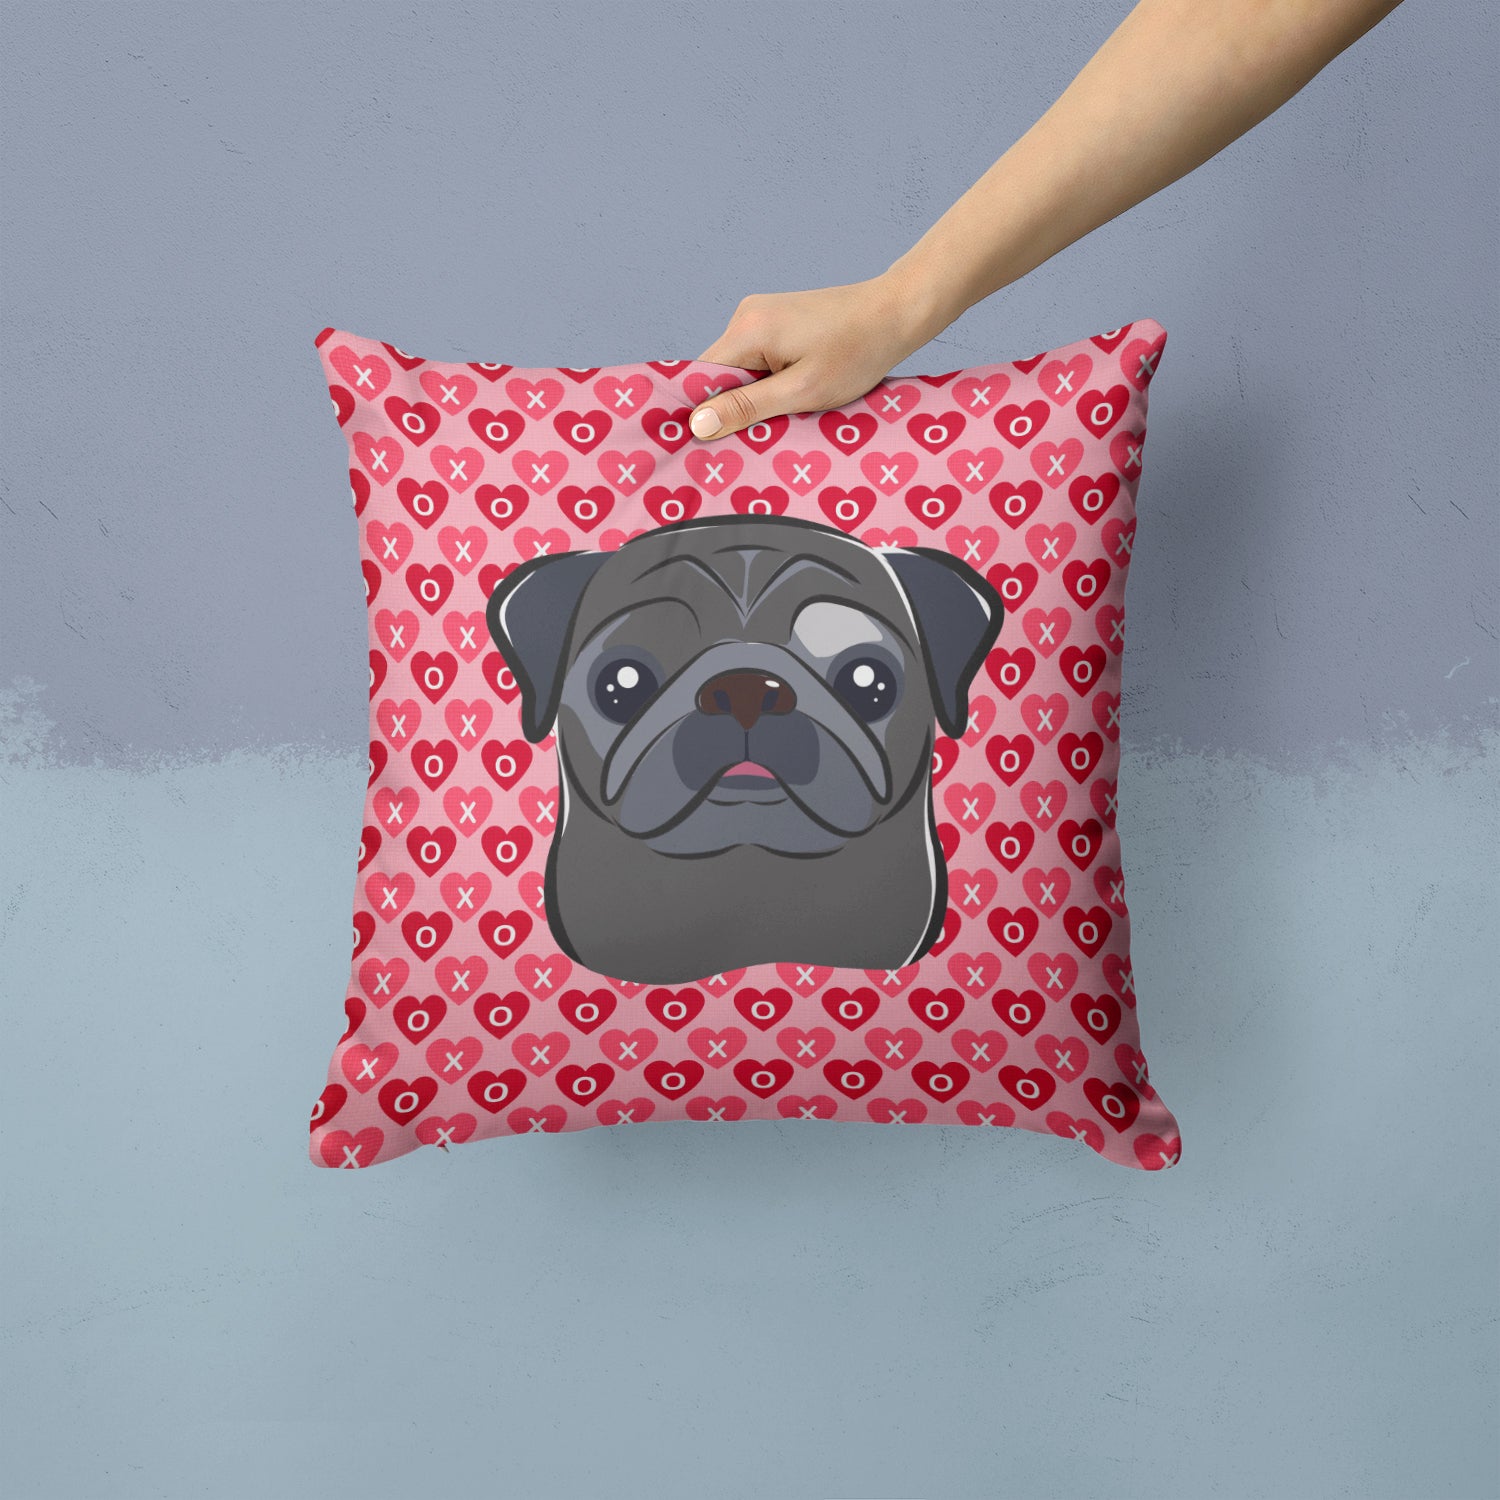 Black Pug Hearts Fabric Decorative Pillow BB5333PW1414 - the-store.com